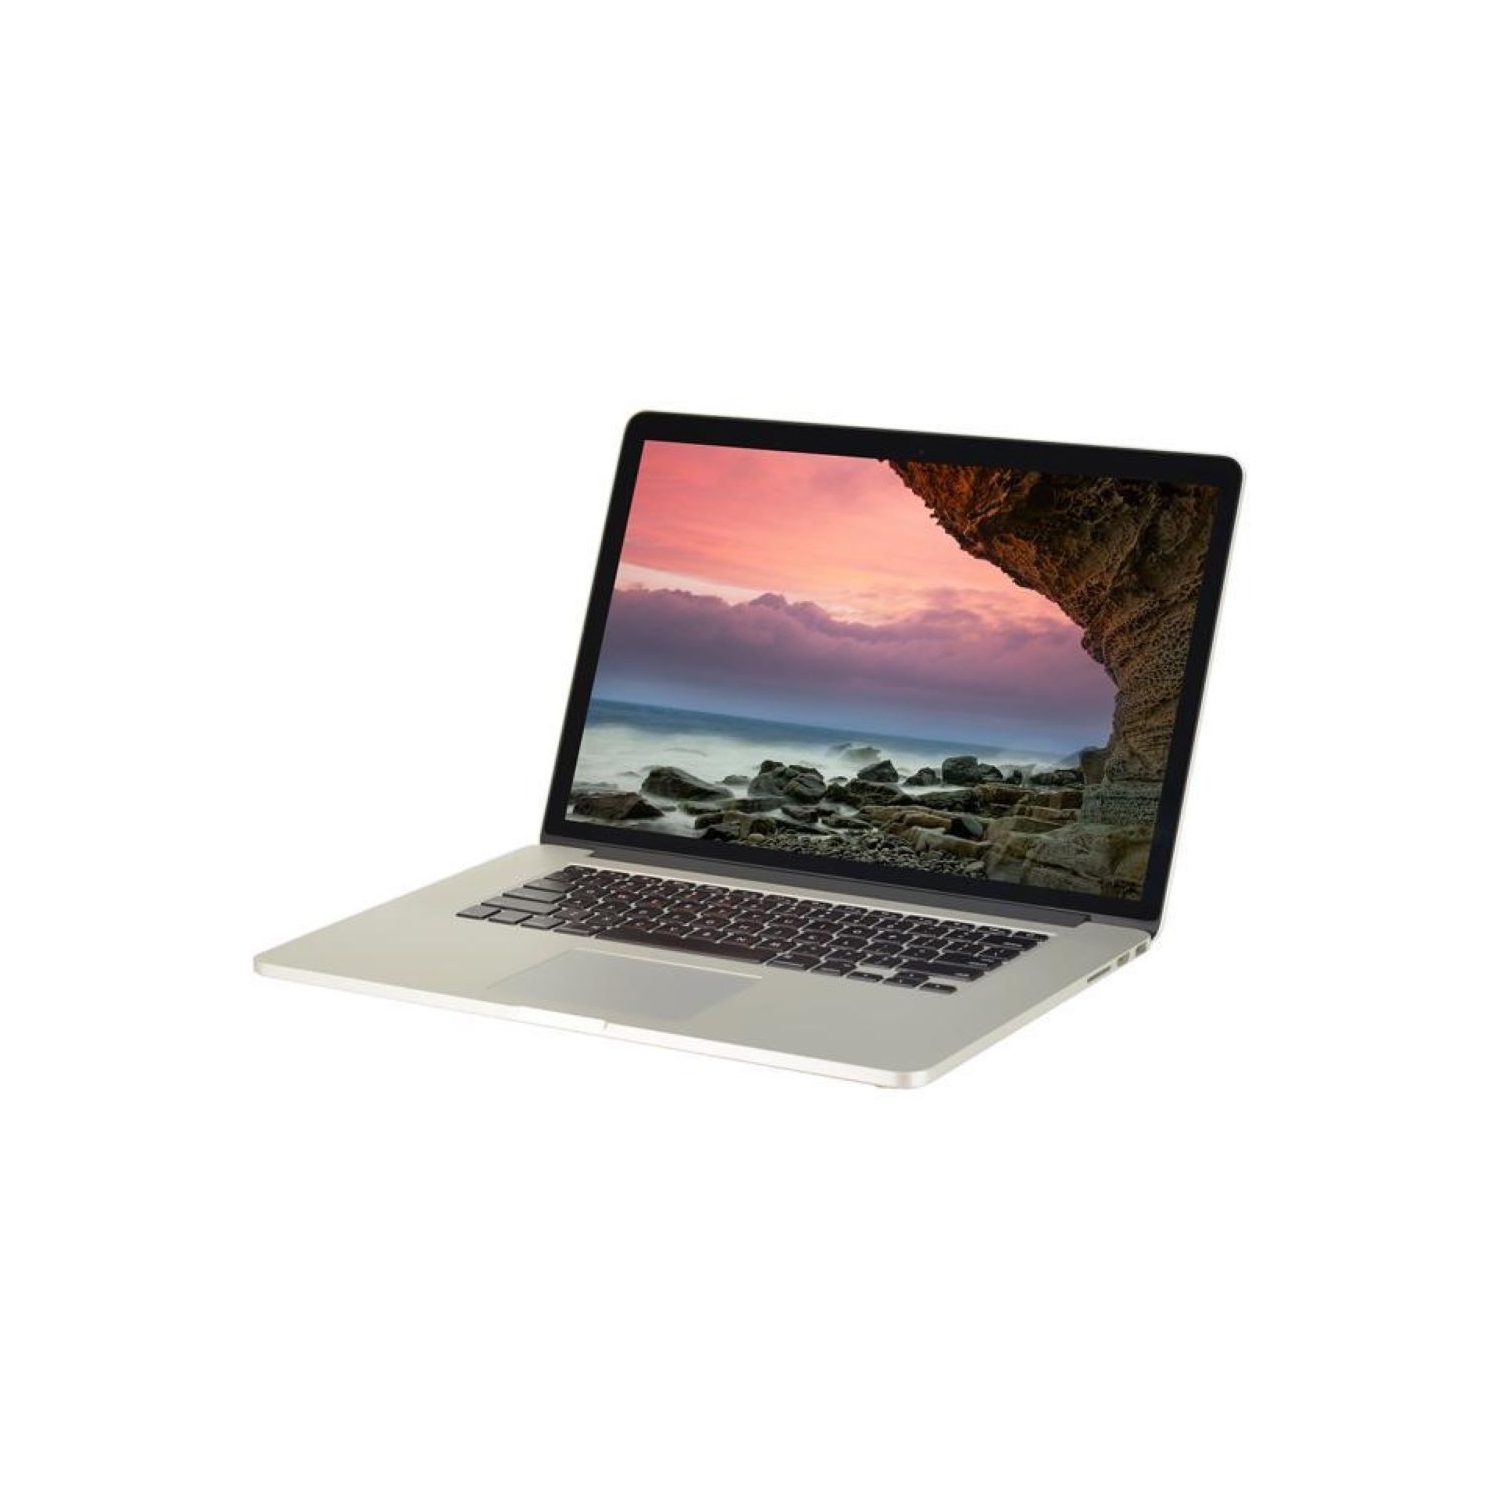 Refurbished (Good) - Apple A1398 MacBook Pro 2015 15" Intel i7- 4980HQ, 2.8GHz, 16GB, 500GB SSD, AMD Radeon R9 M370X 2GB PCI-e, Intel Iris Pro 1536MB (2880X1800), Mac OS X 11.0.1